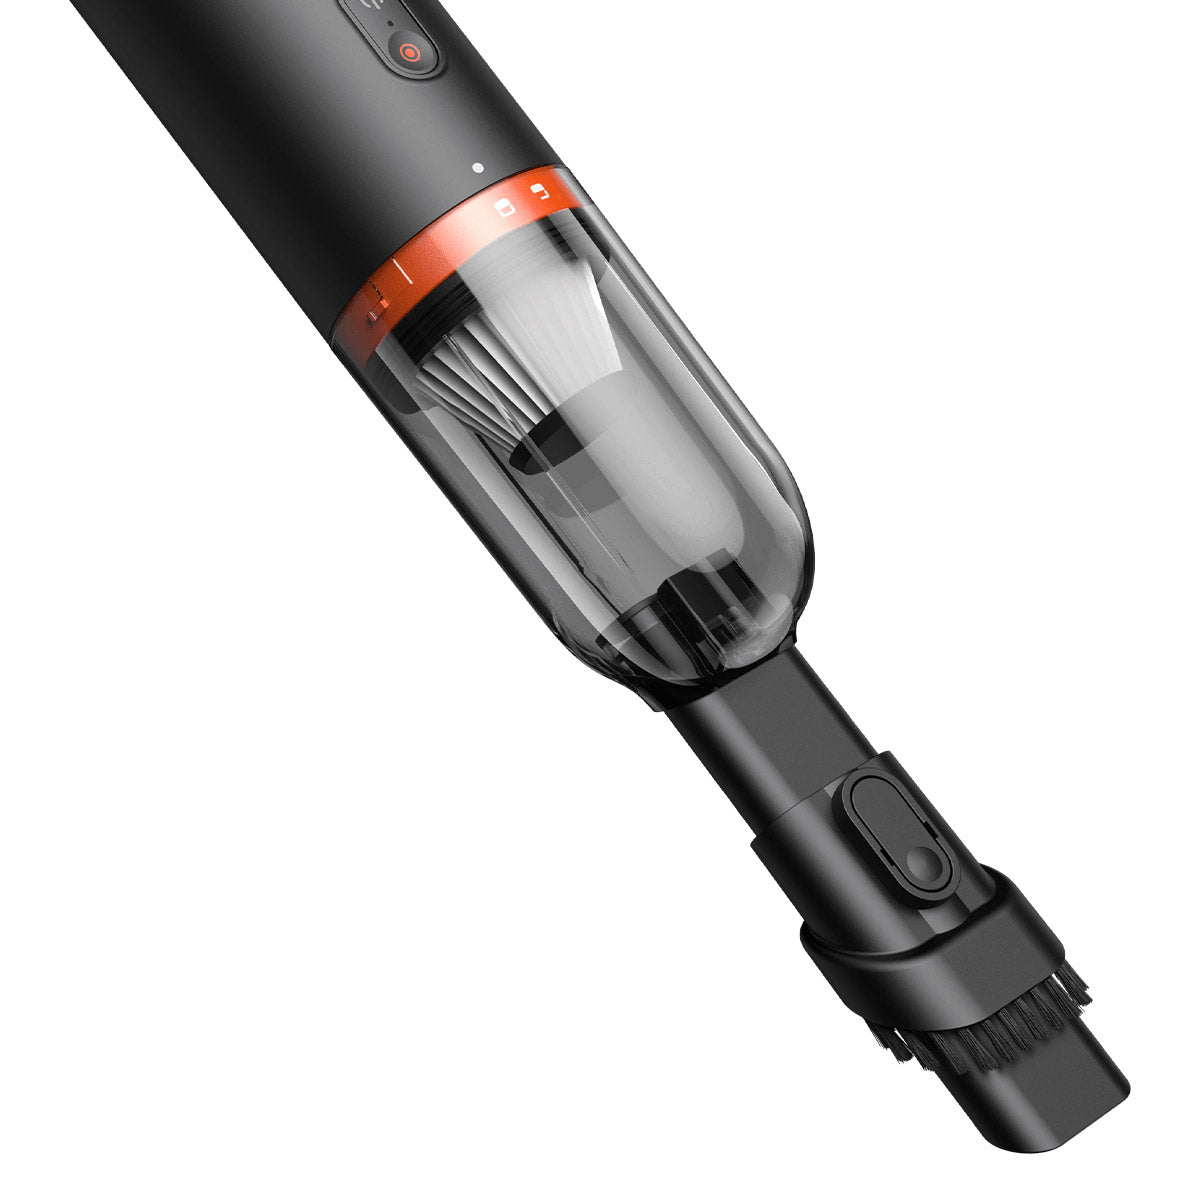 Baseus A2 Pro Car Vacuum Cleaner